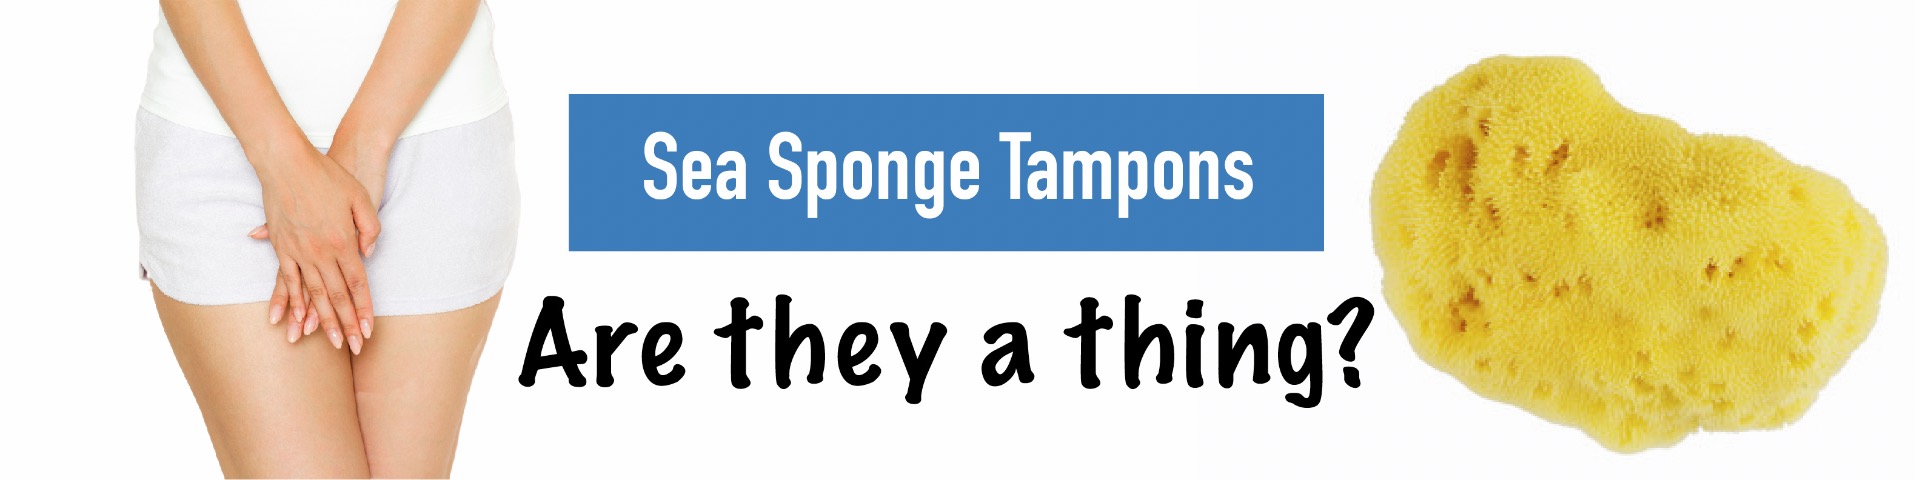 Buy sea sponge menstrual tampons in the UK